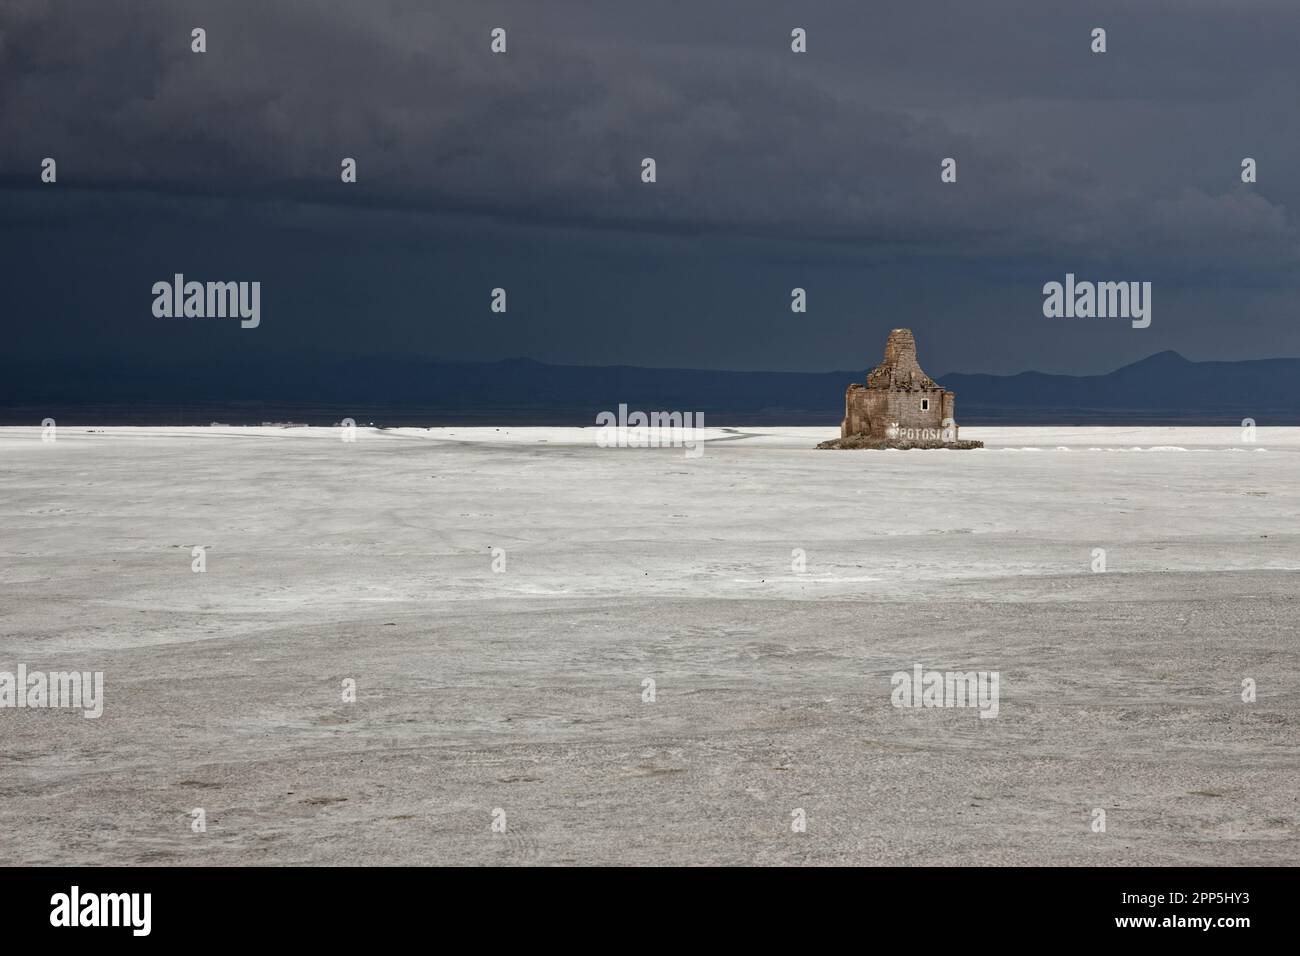 A coming storm at the salt flats of Salar de Uyuni, Bolivia Stock Photo